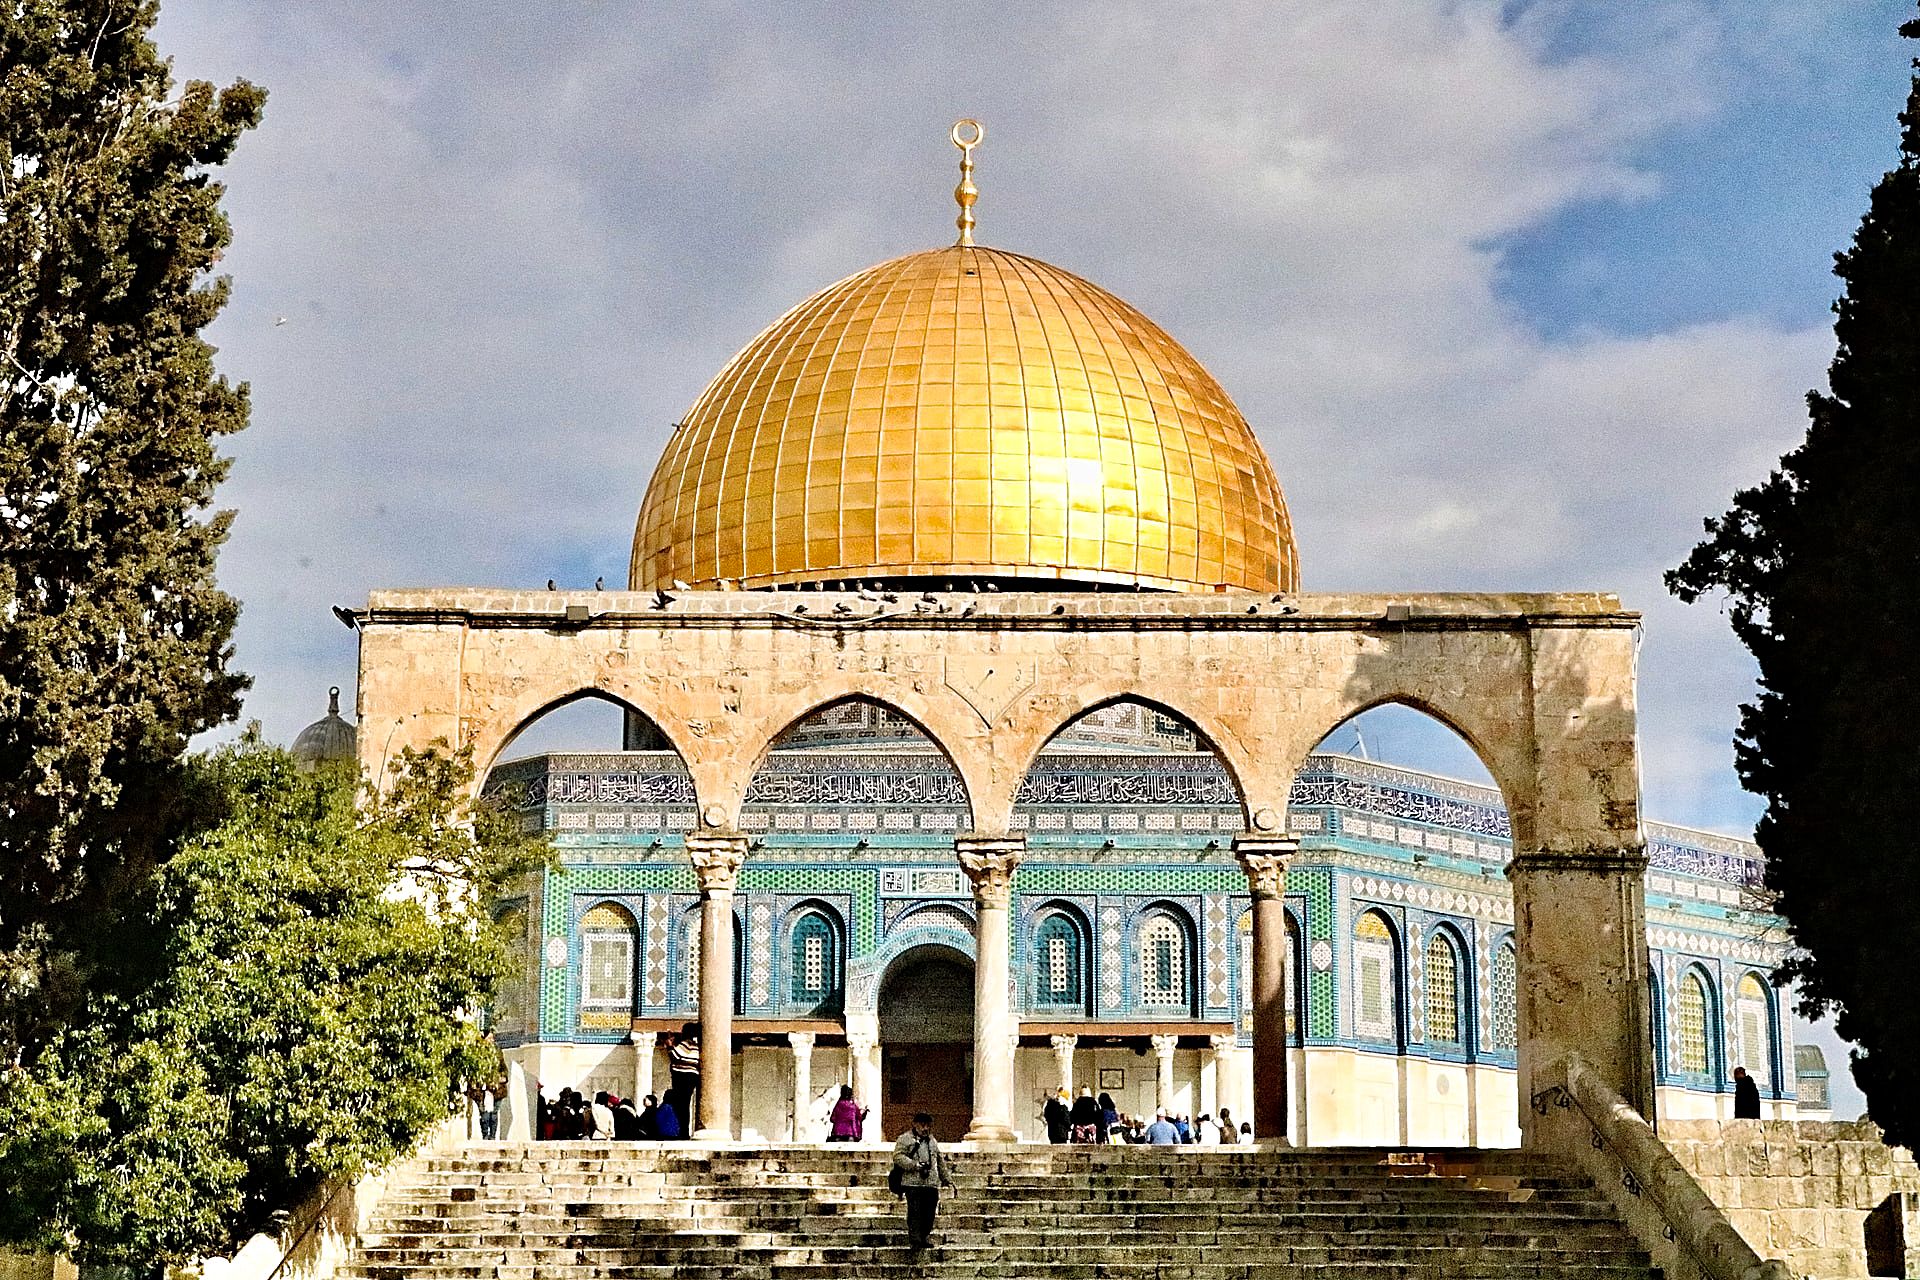 Temple Mount, Jerusalem, Israel